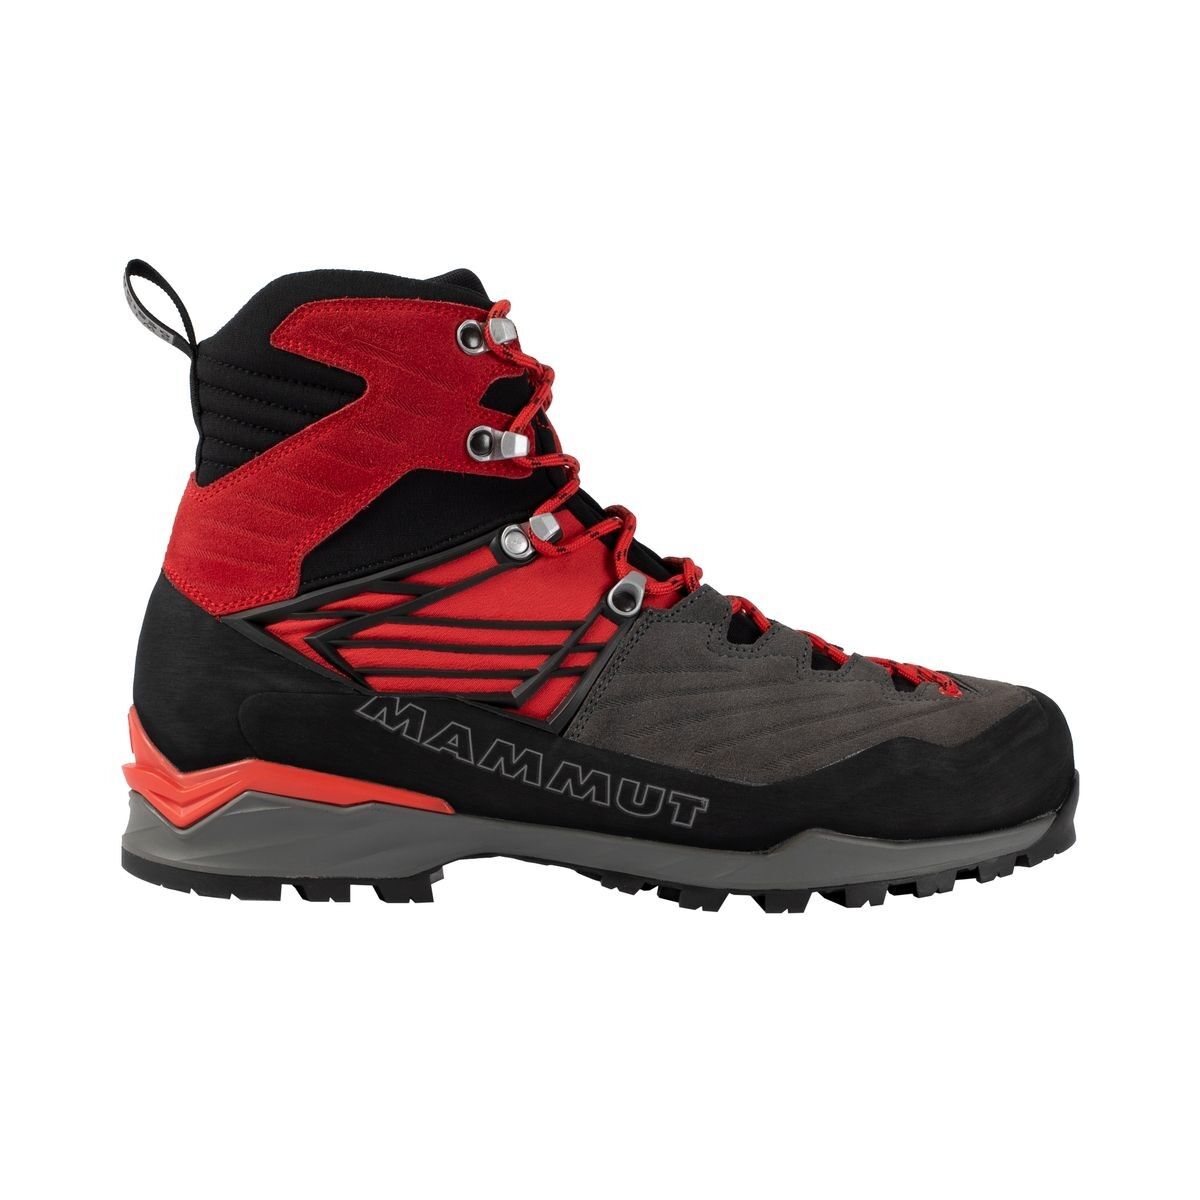 Mammut Kento Pro High GTX - Mountaineering Boots - Men's